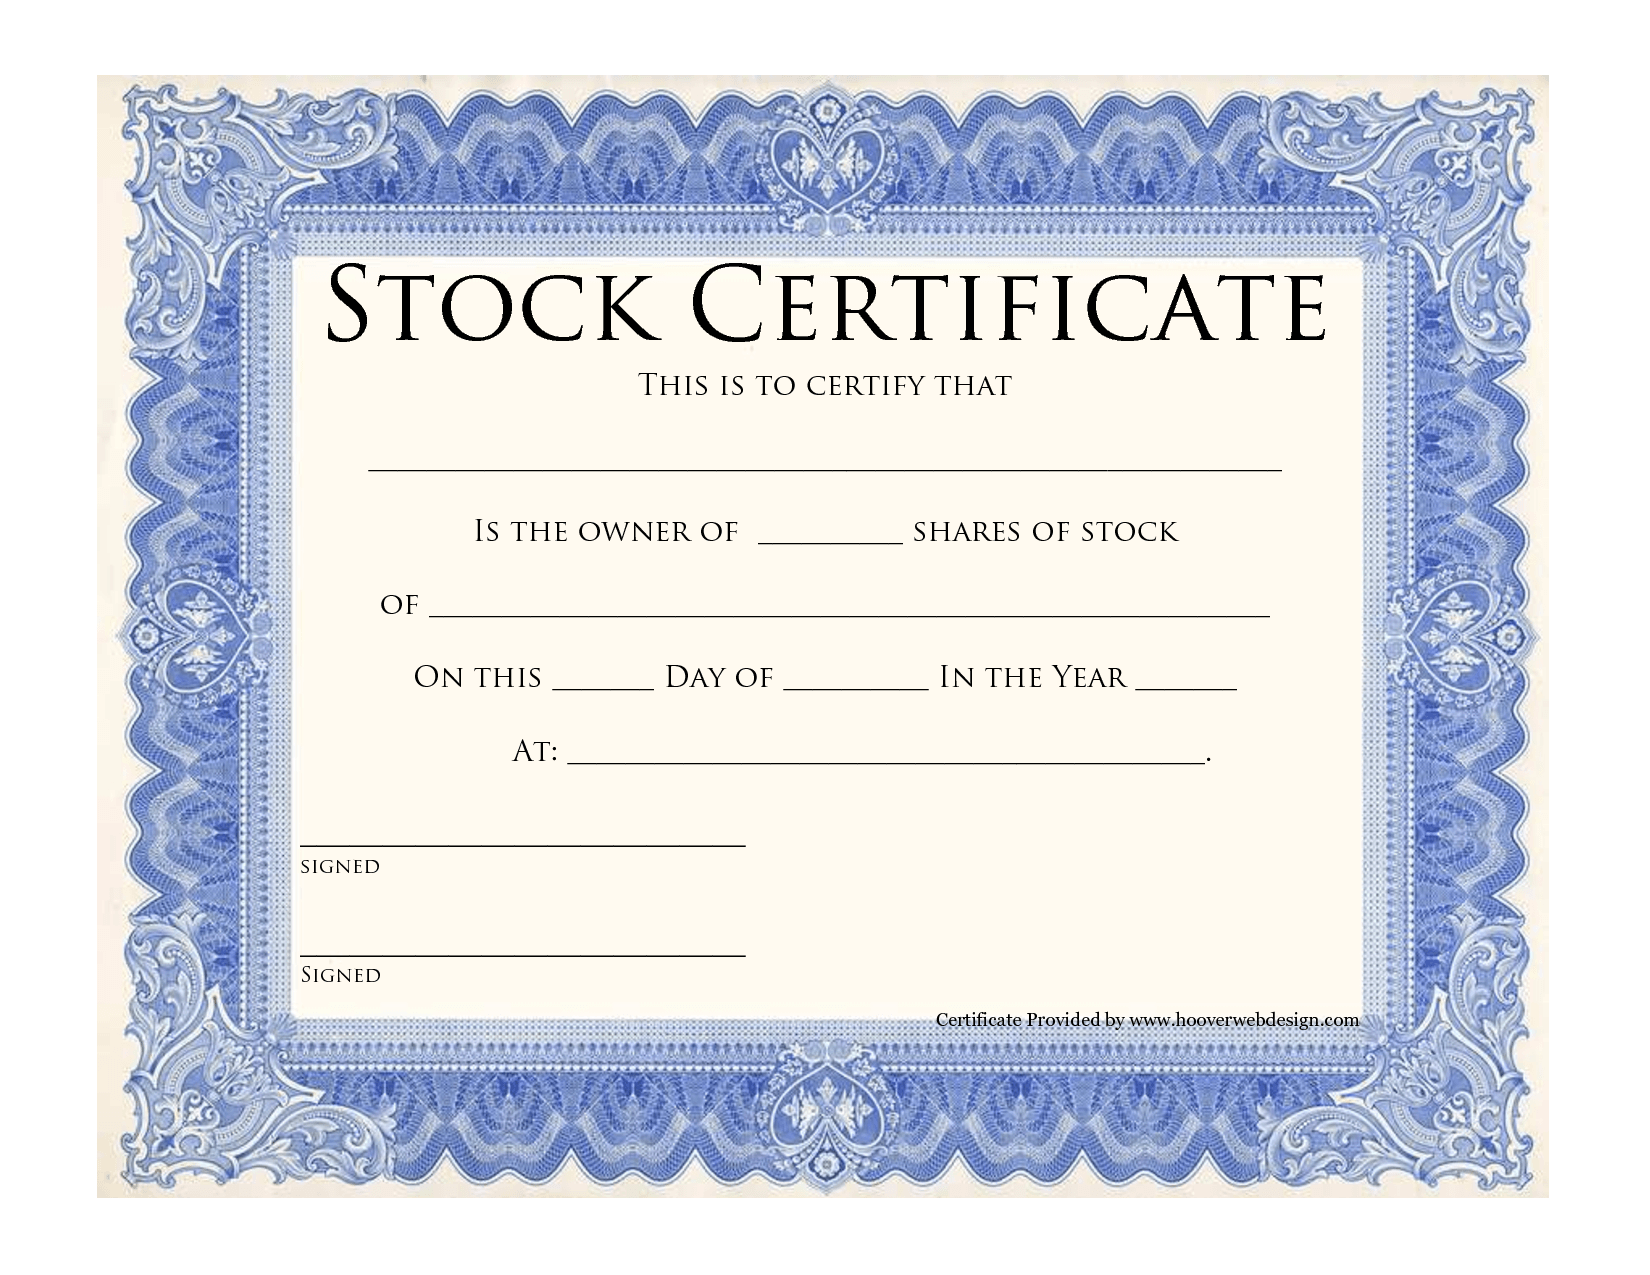 clip art stock certificate - photo #44